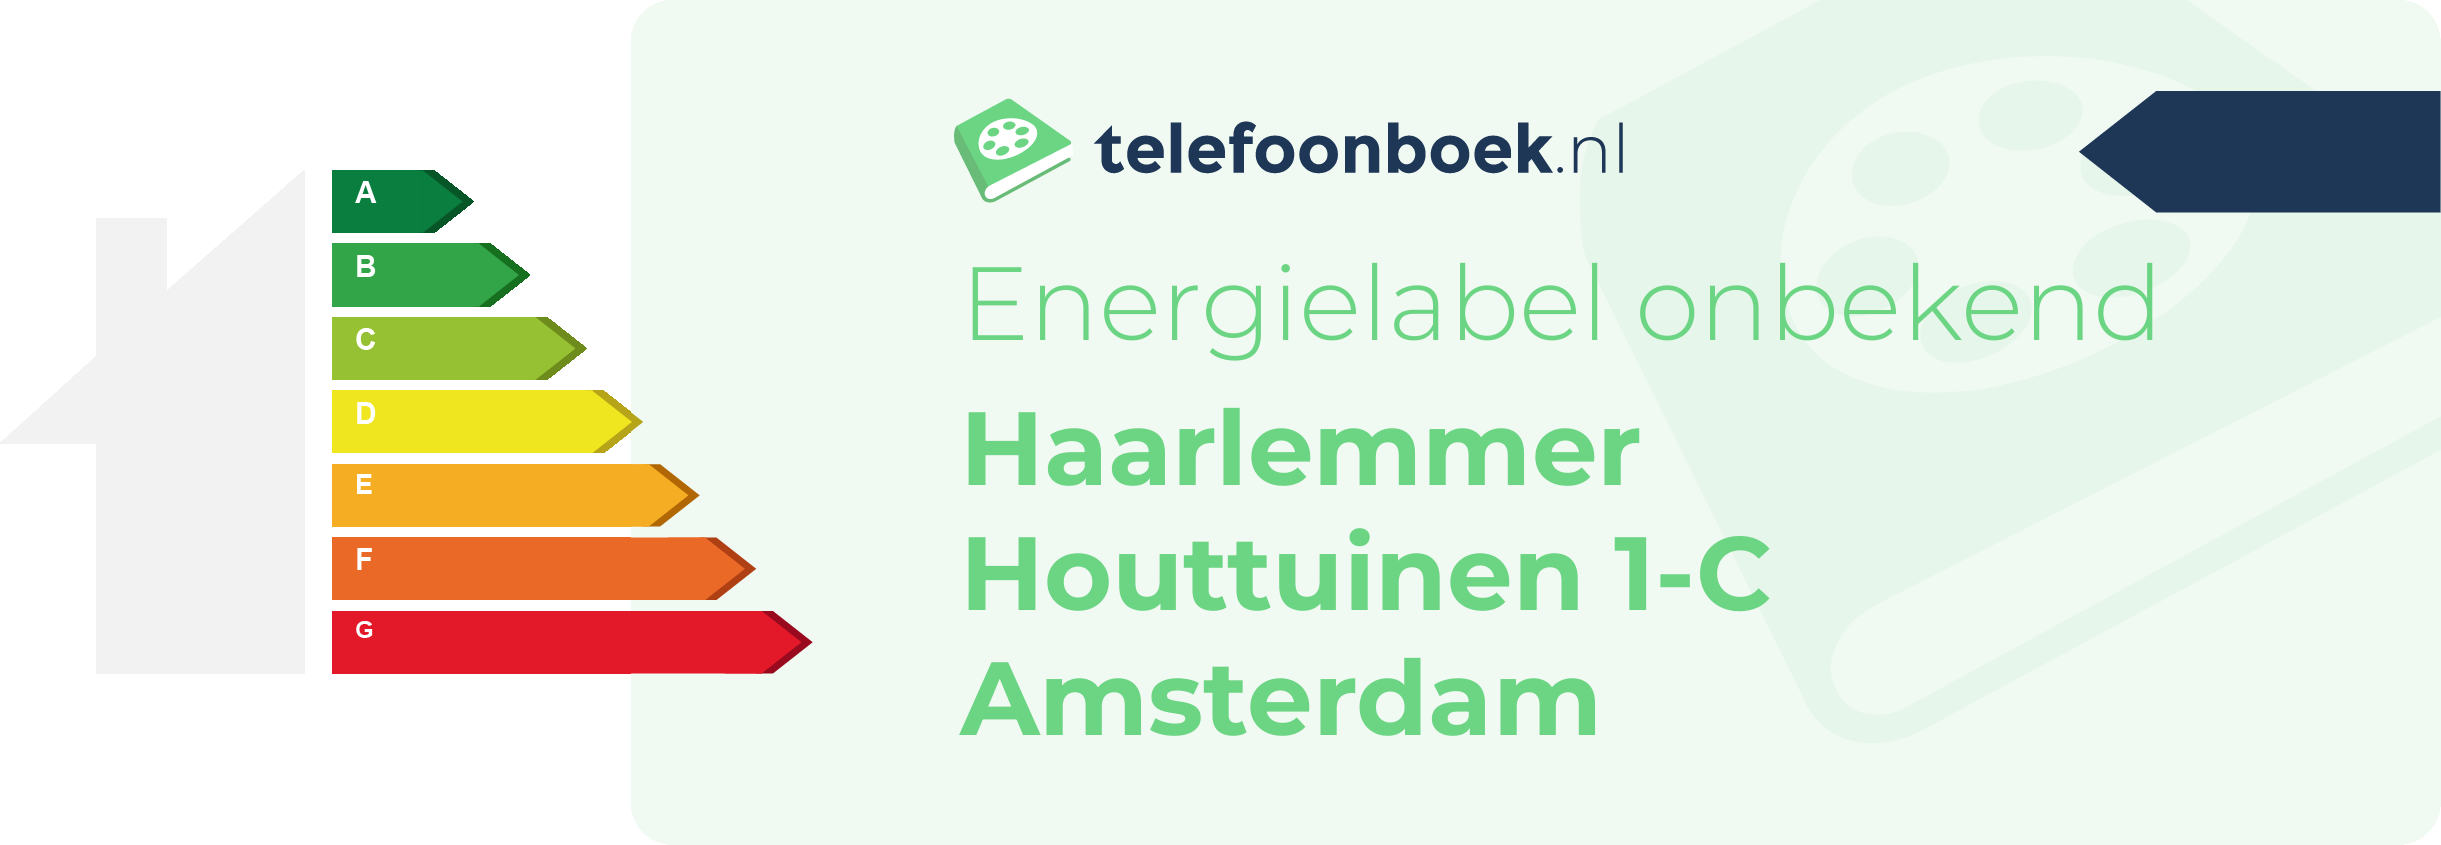 Energielabel Haarlemmer Houttuinen 1-C Amsterdam